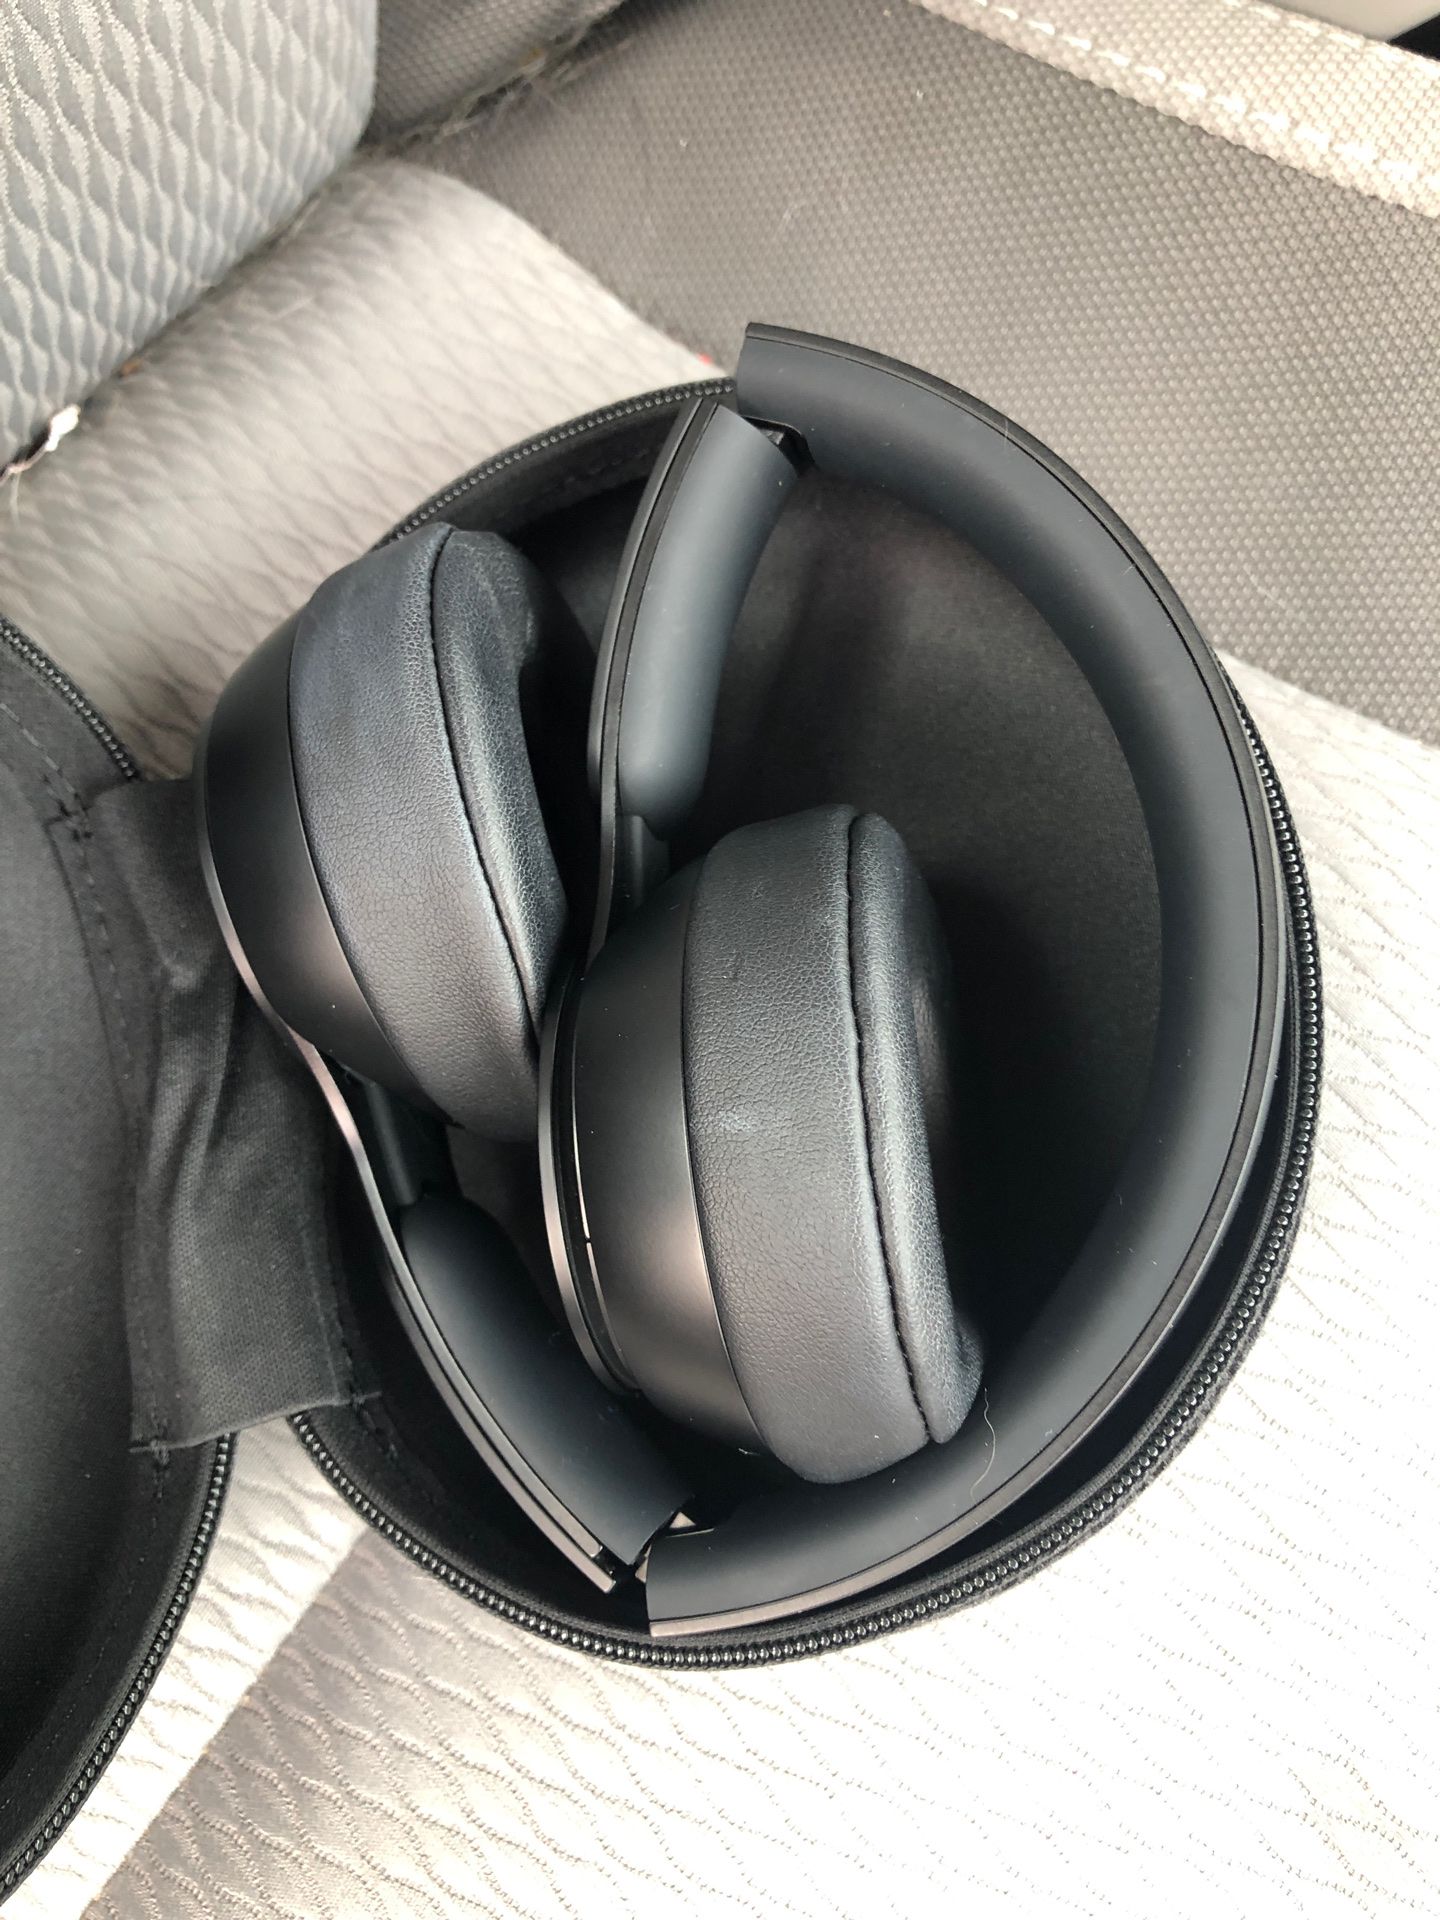 Noise canceling solo pro beats headphones wireless